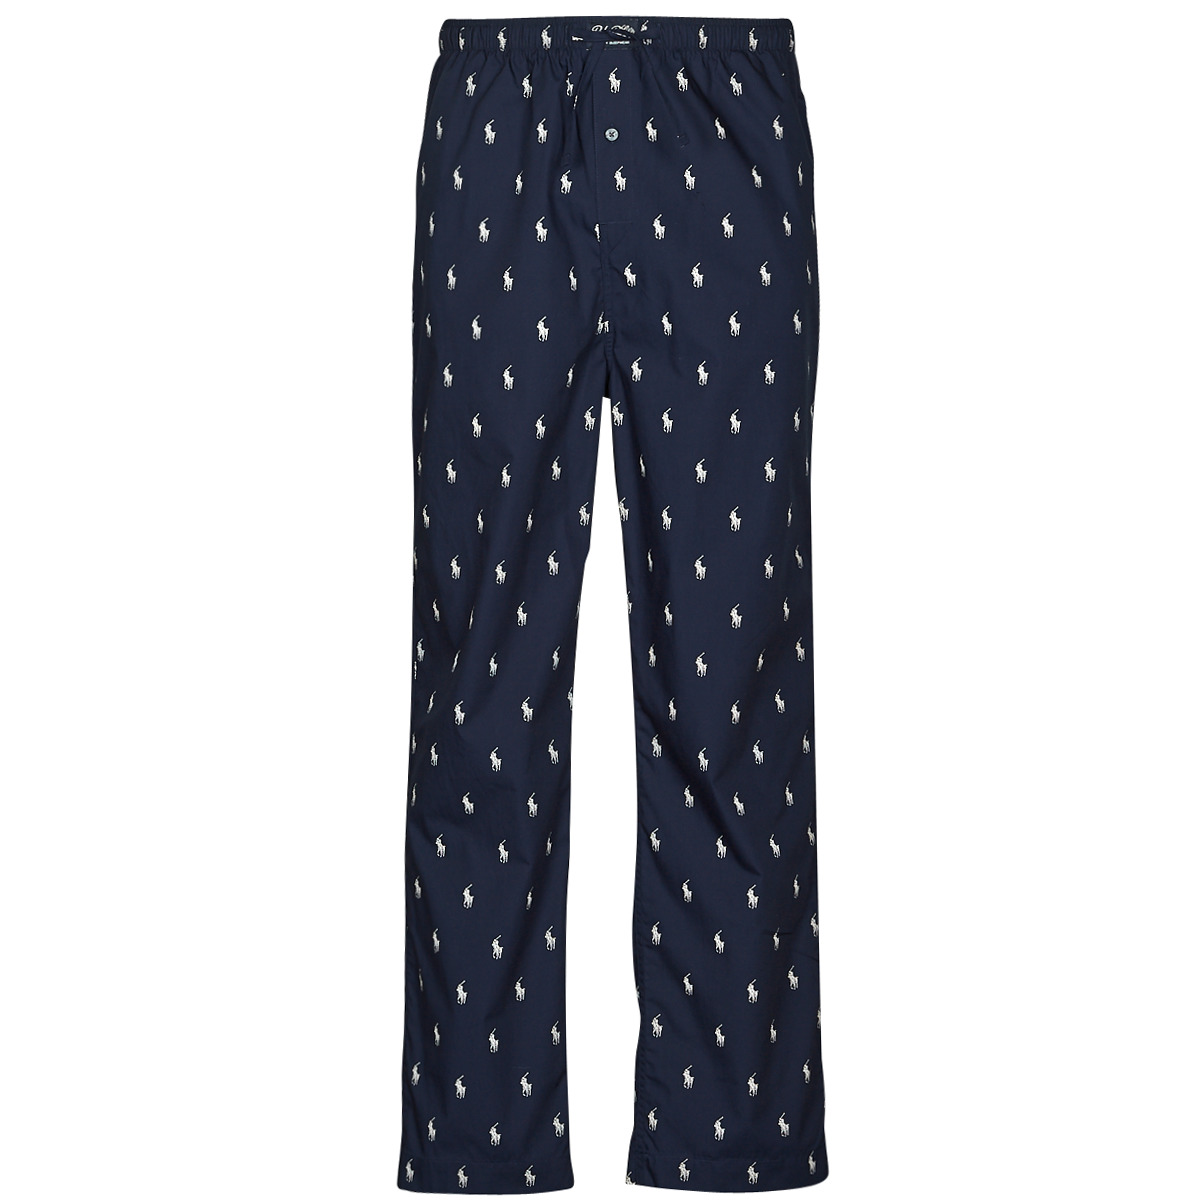 textil Pyjamas/nattlinne Polo Ralph Lauren SLEEPWEAR-PJ PANT-SLEEP-BOTTOM Marin / Vit